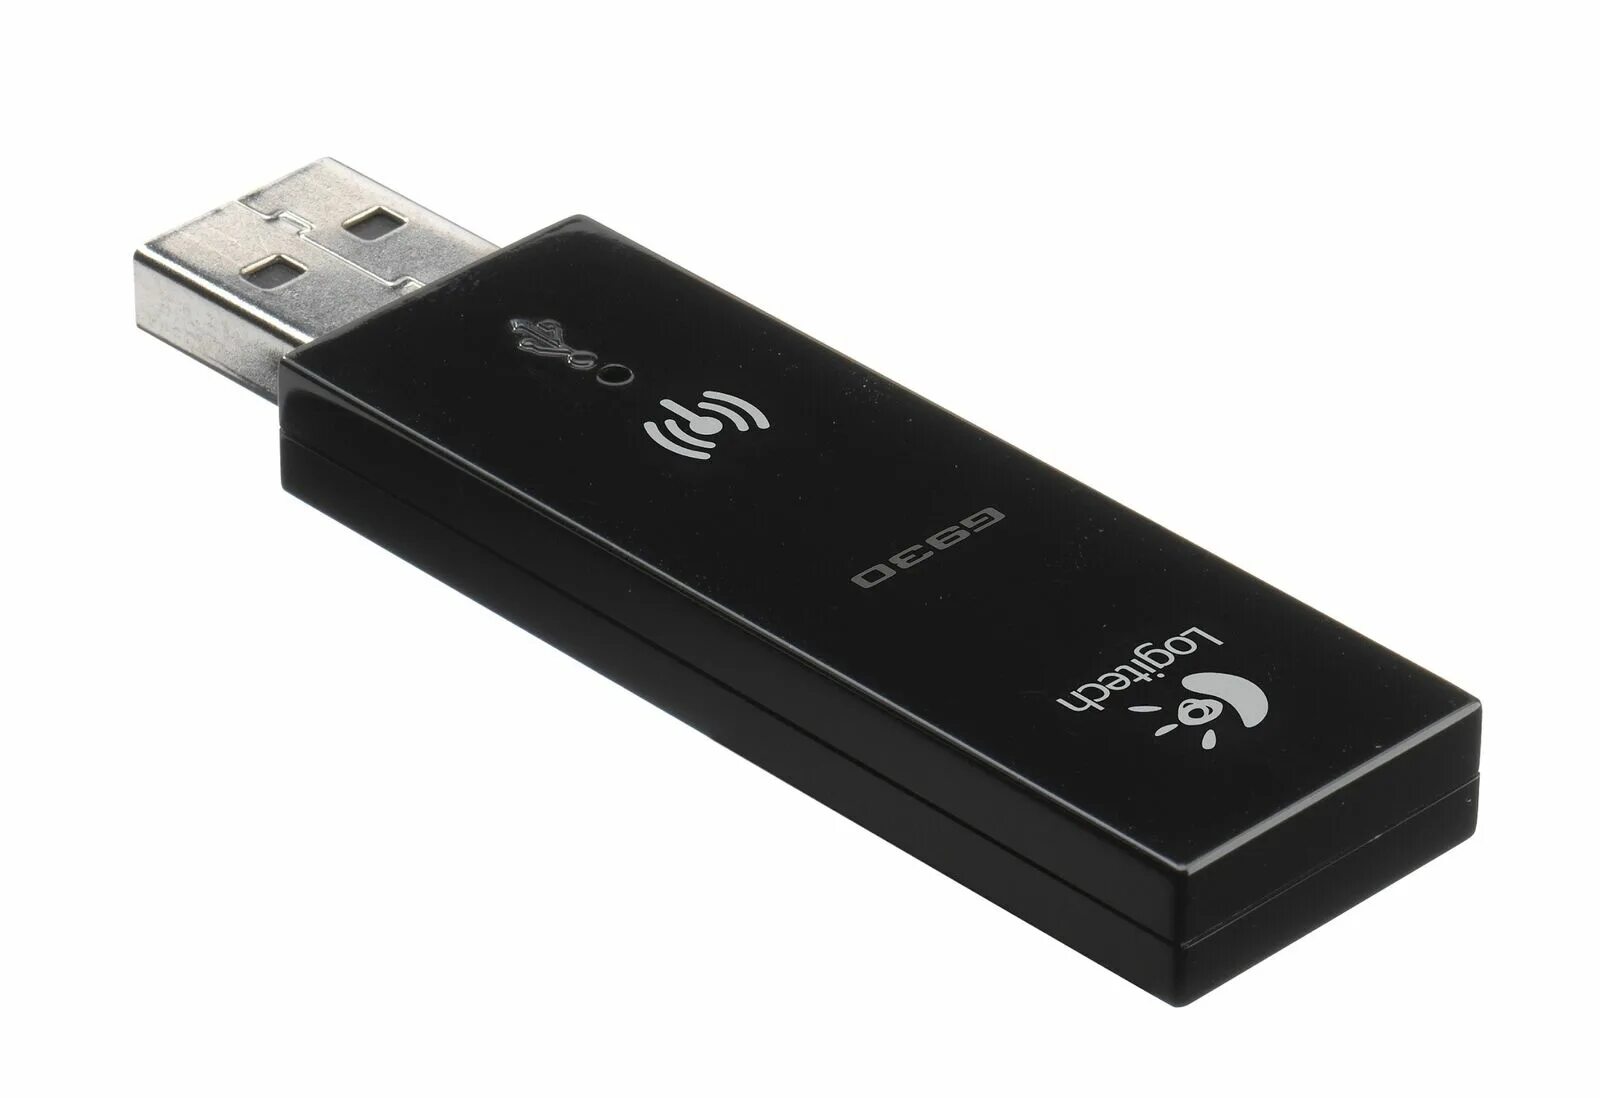 Usb logitech купить. Logitech USB Receiver mk320. Logitech Wireless USB Receiver. USB Receiver for Logitech - g733. Wireless USB 2.0 Receiver Kit.